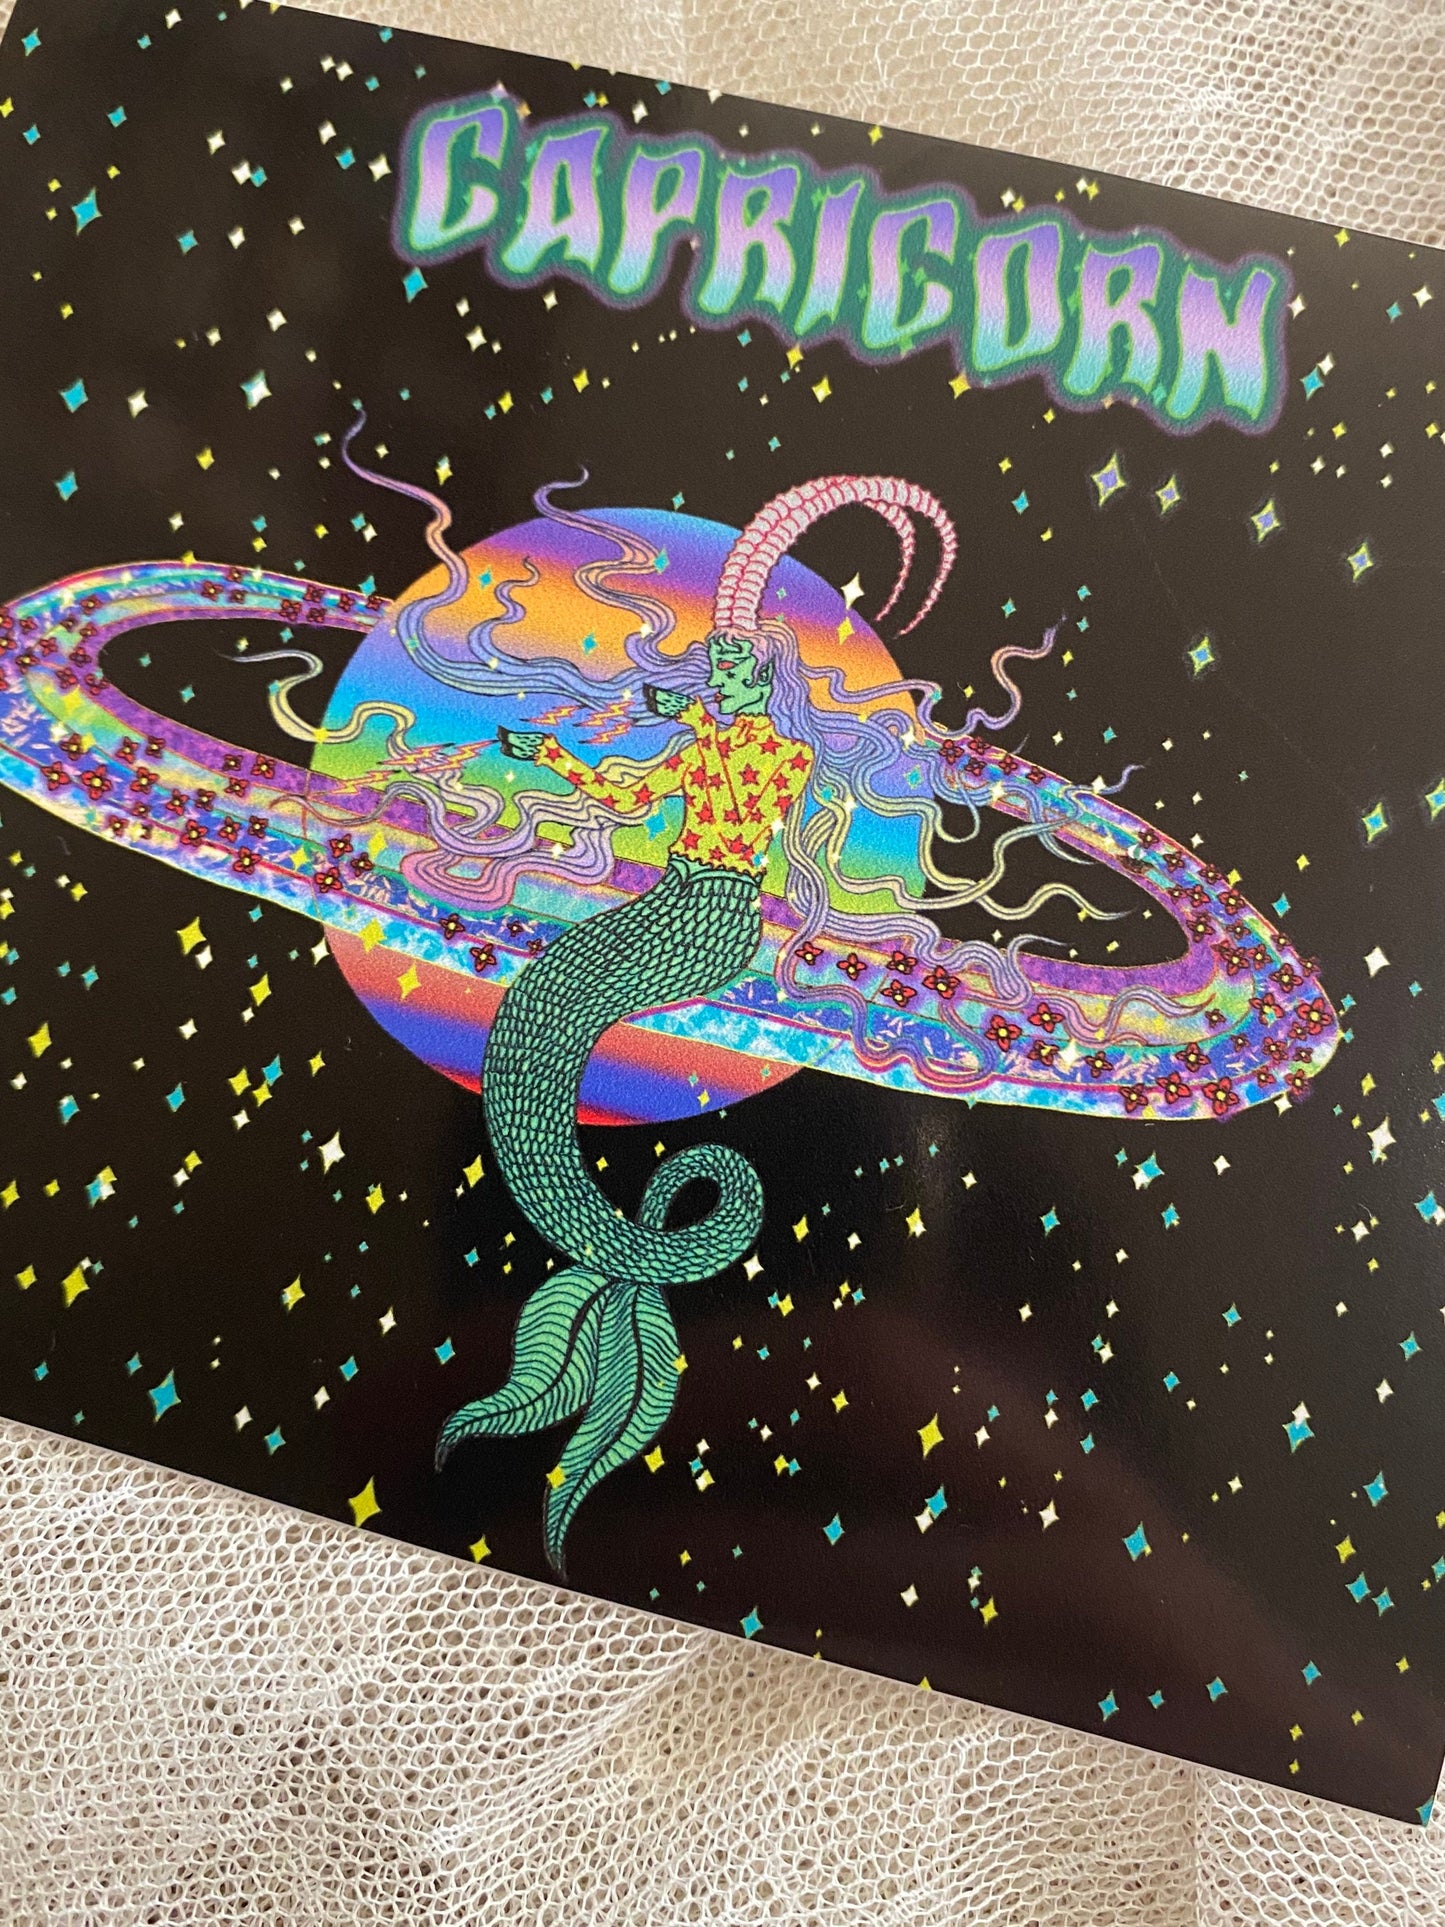 Capricorn vinyl sticker